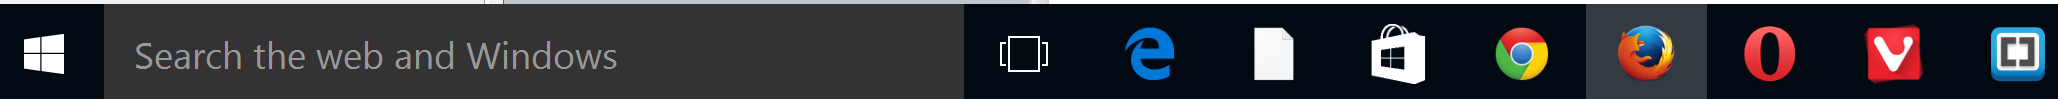 Taskbar in Windows 10